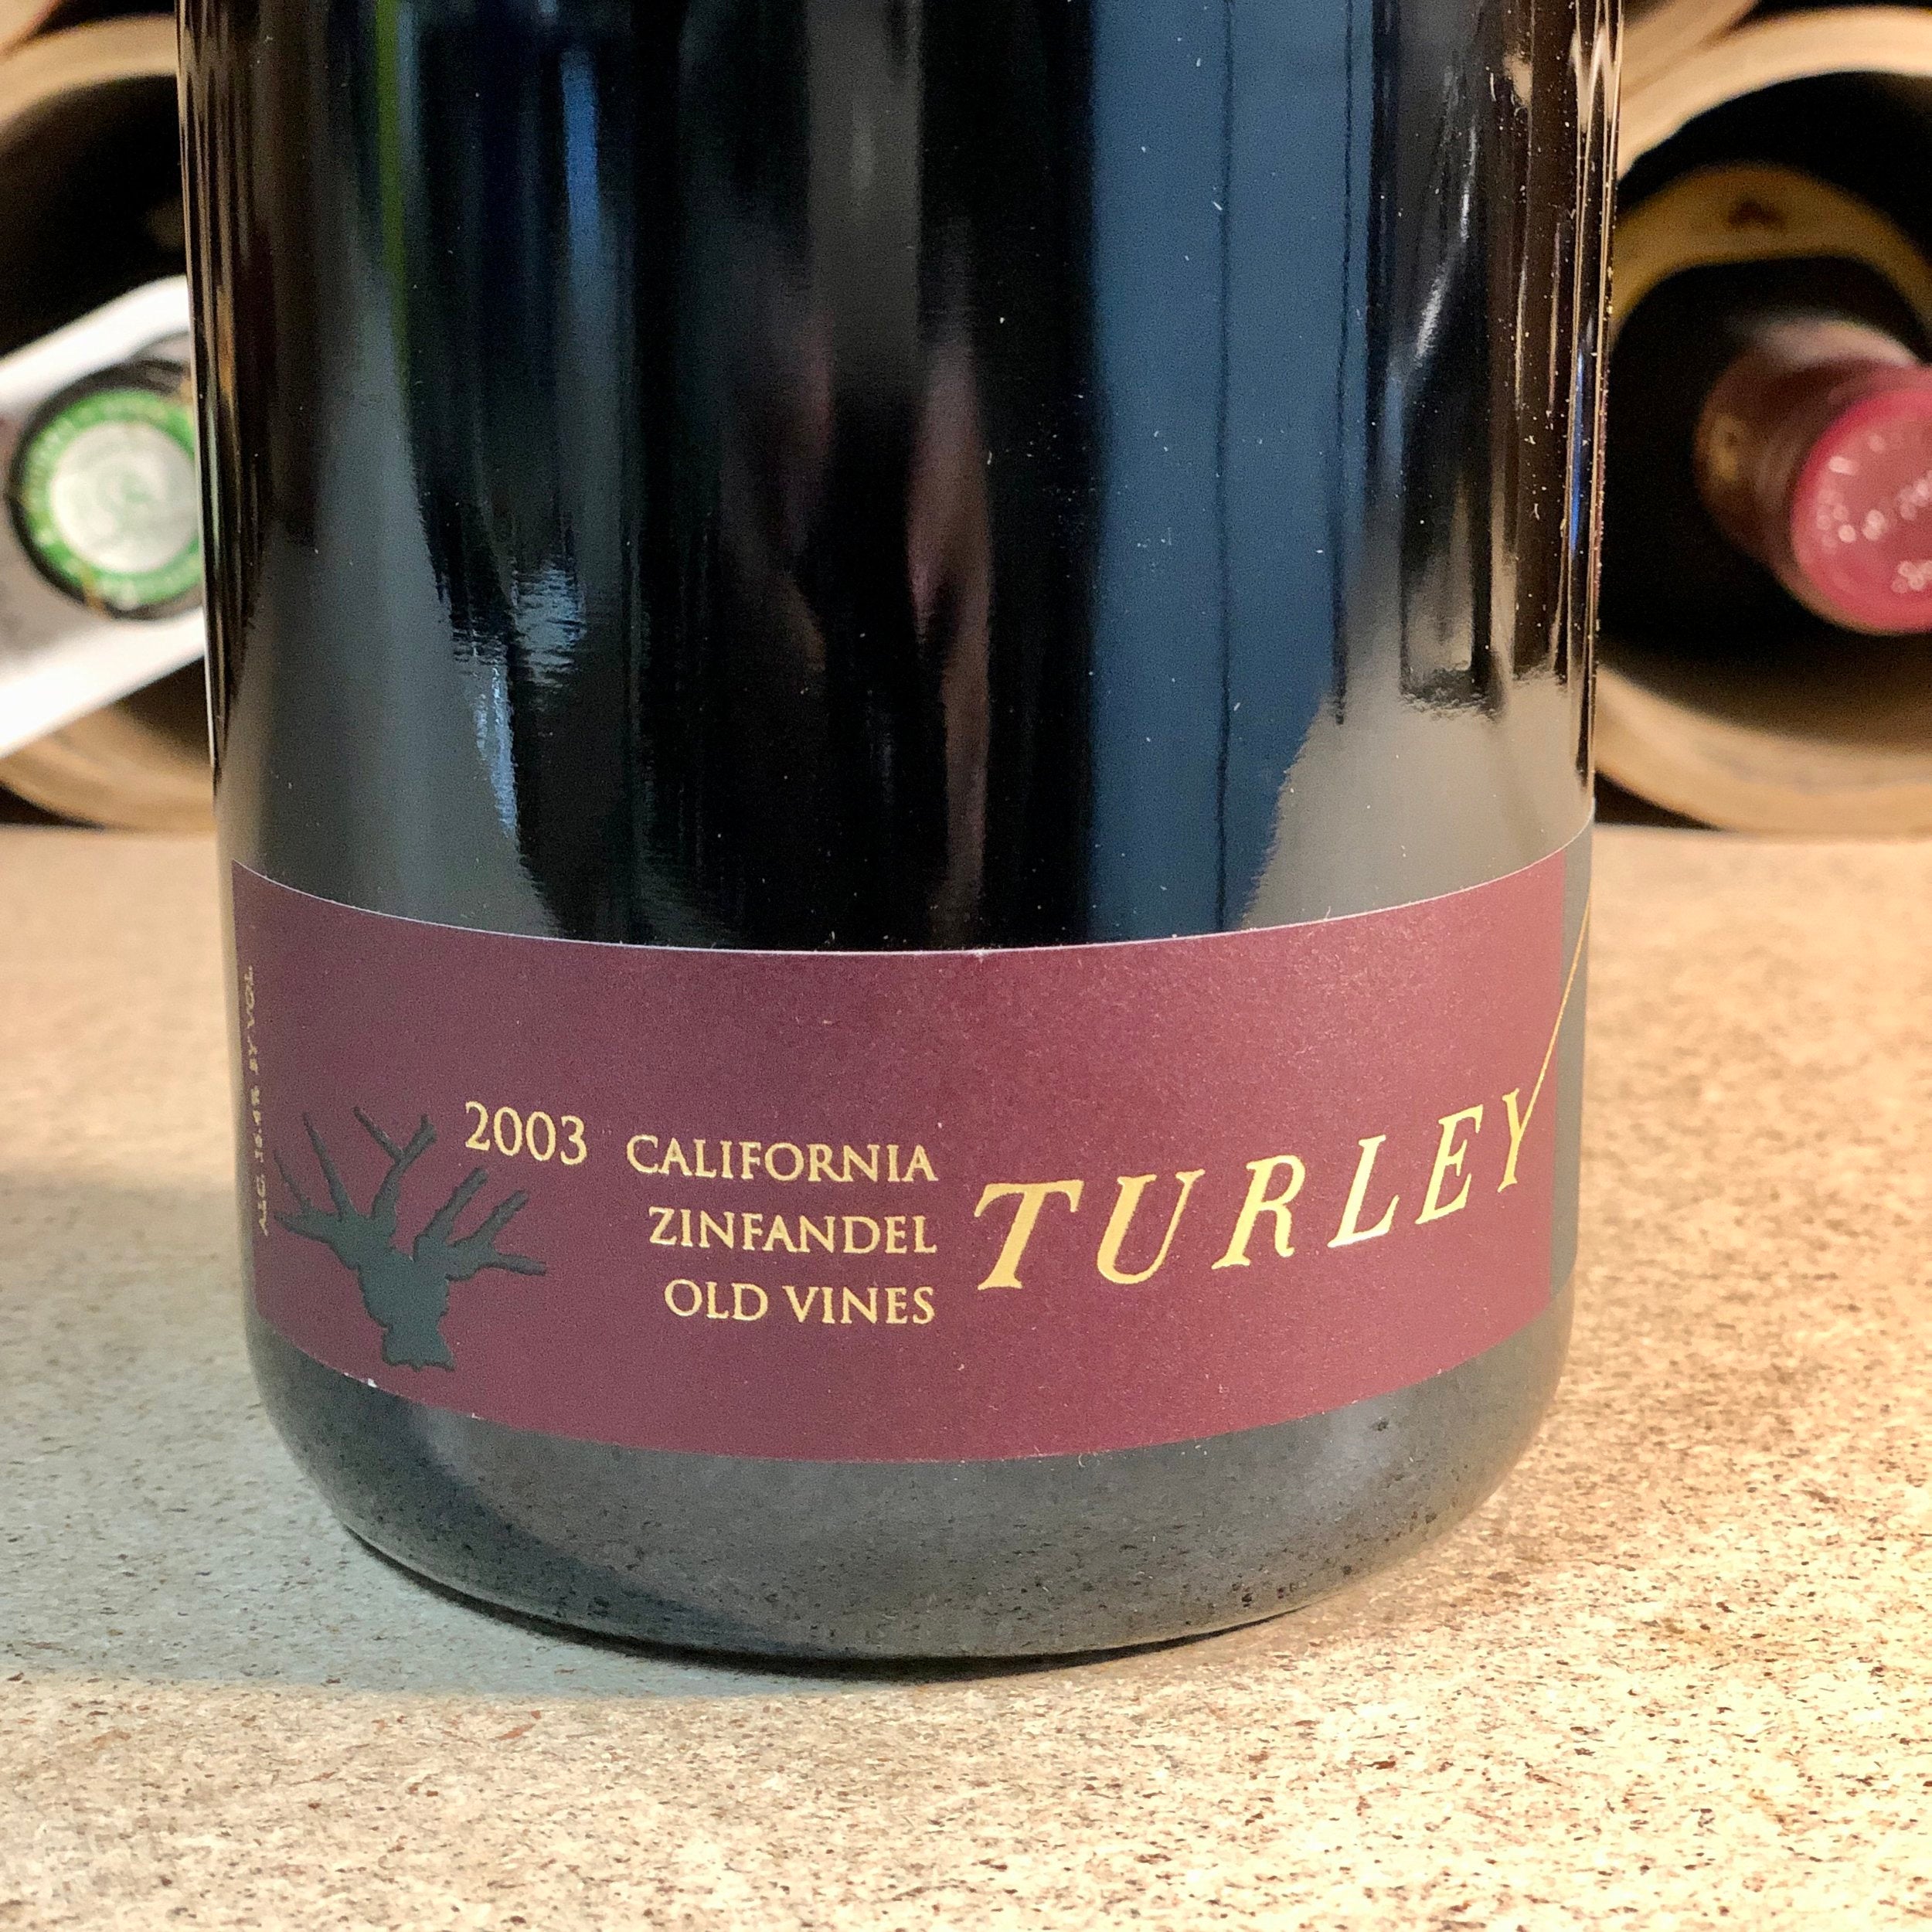 Turley, Old Vines, Zinfandel 2003